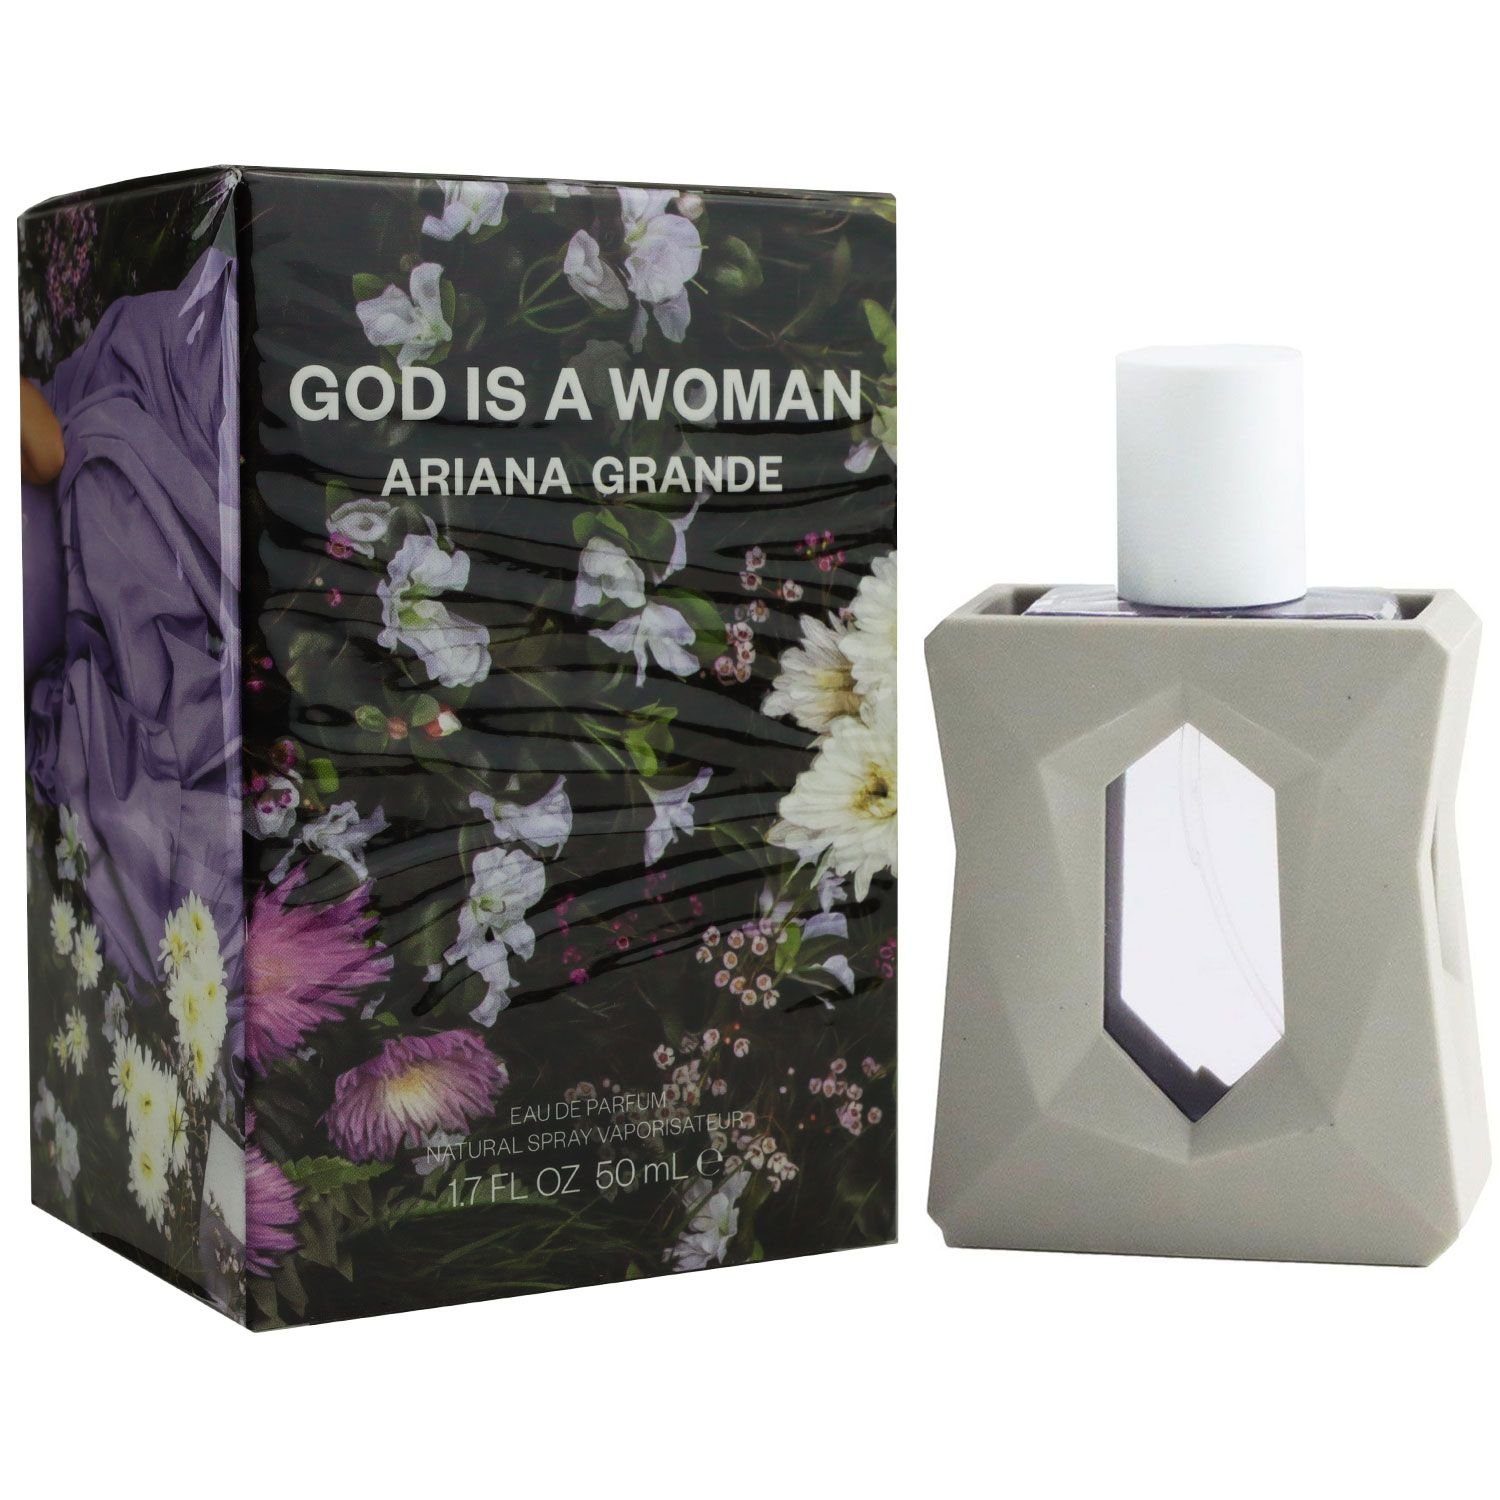 Woman Eau de Parfum is God GRANDE ARIANA a ml 50